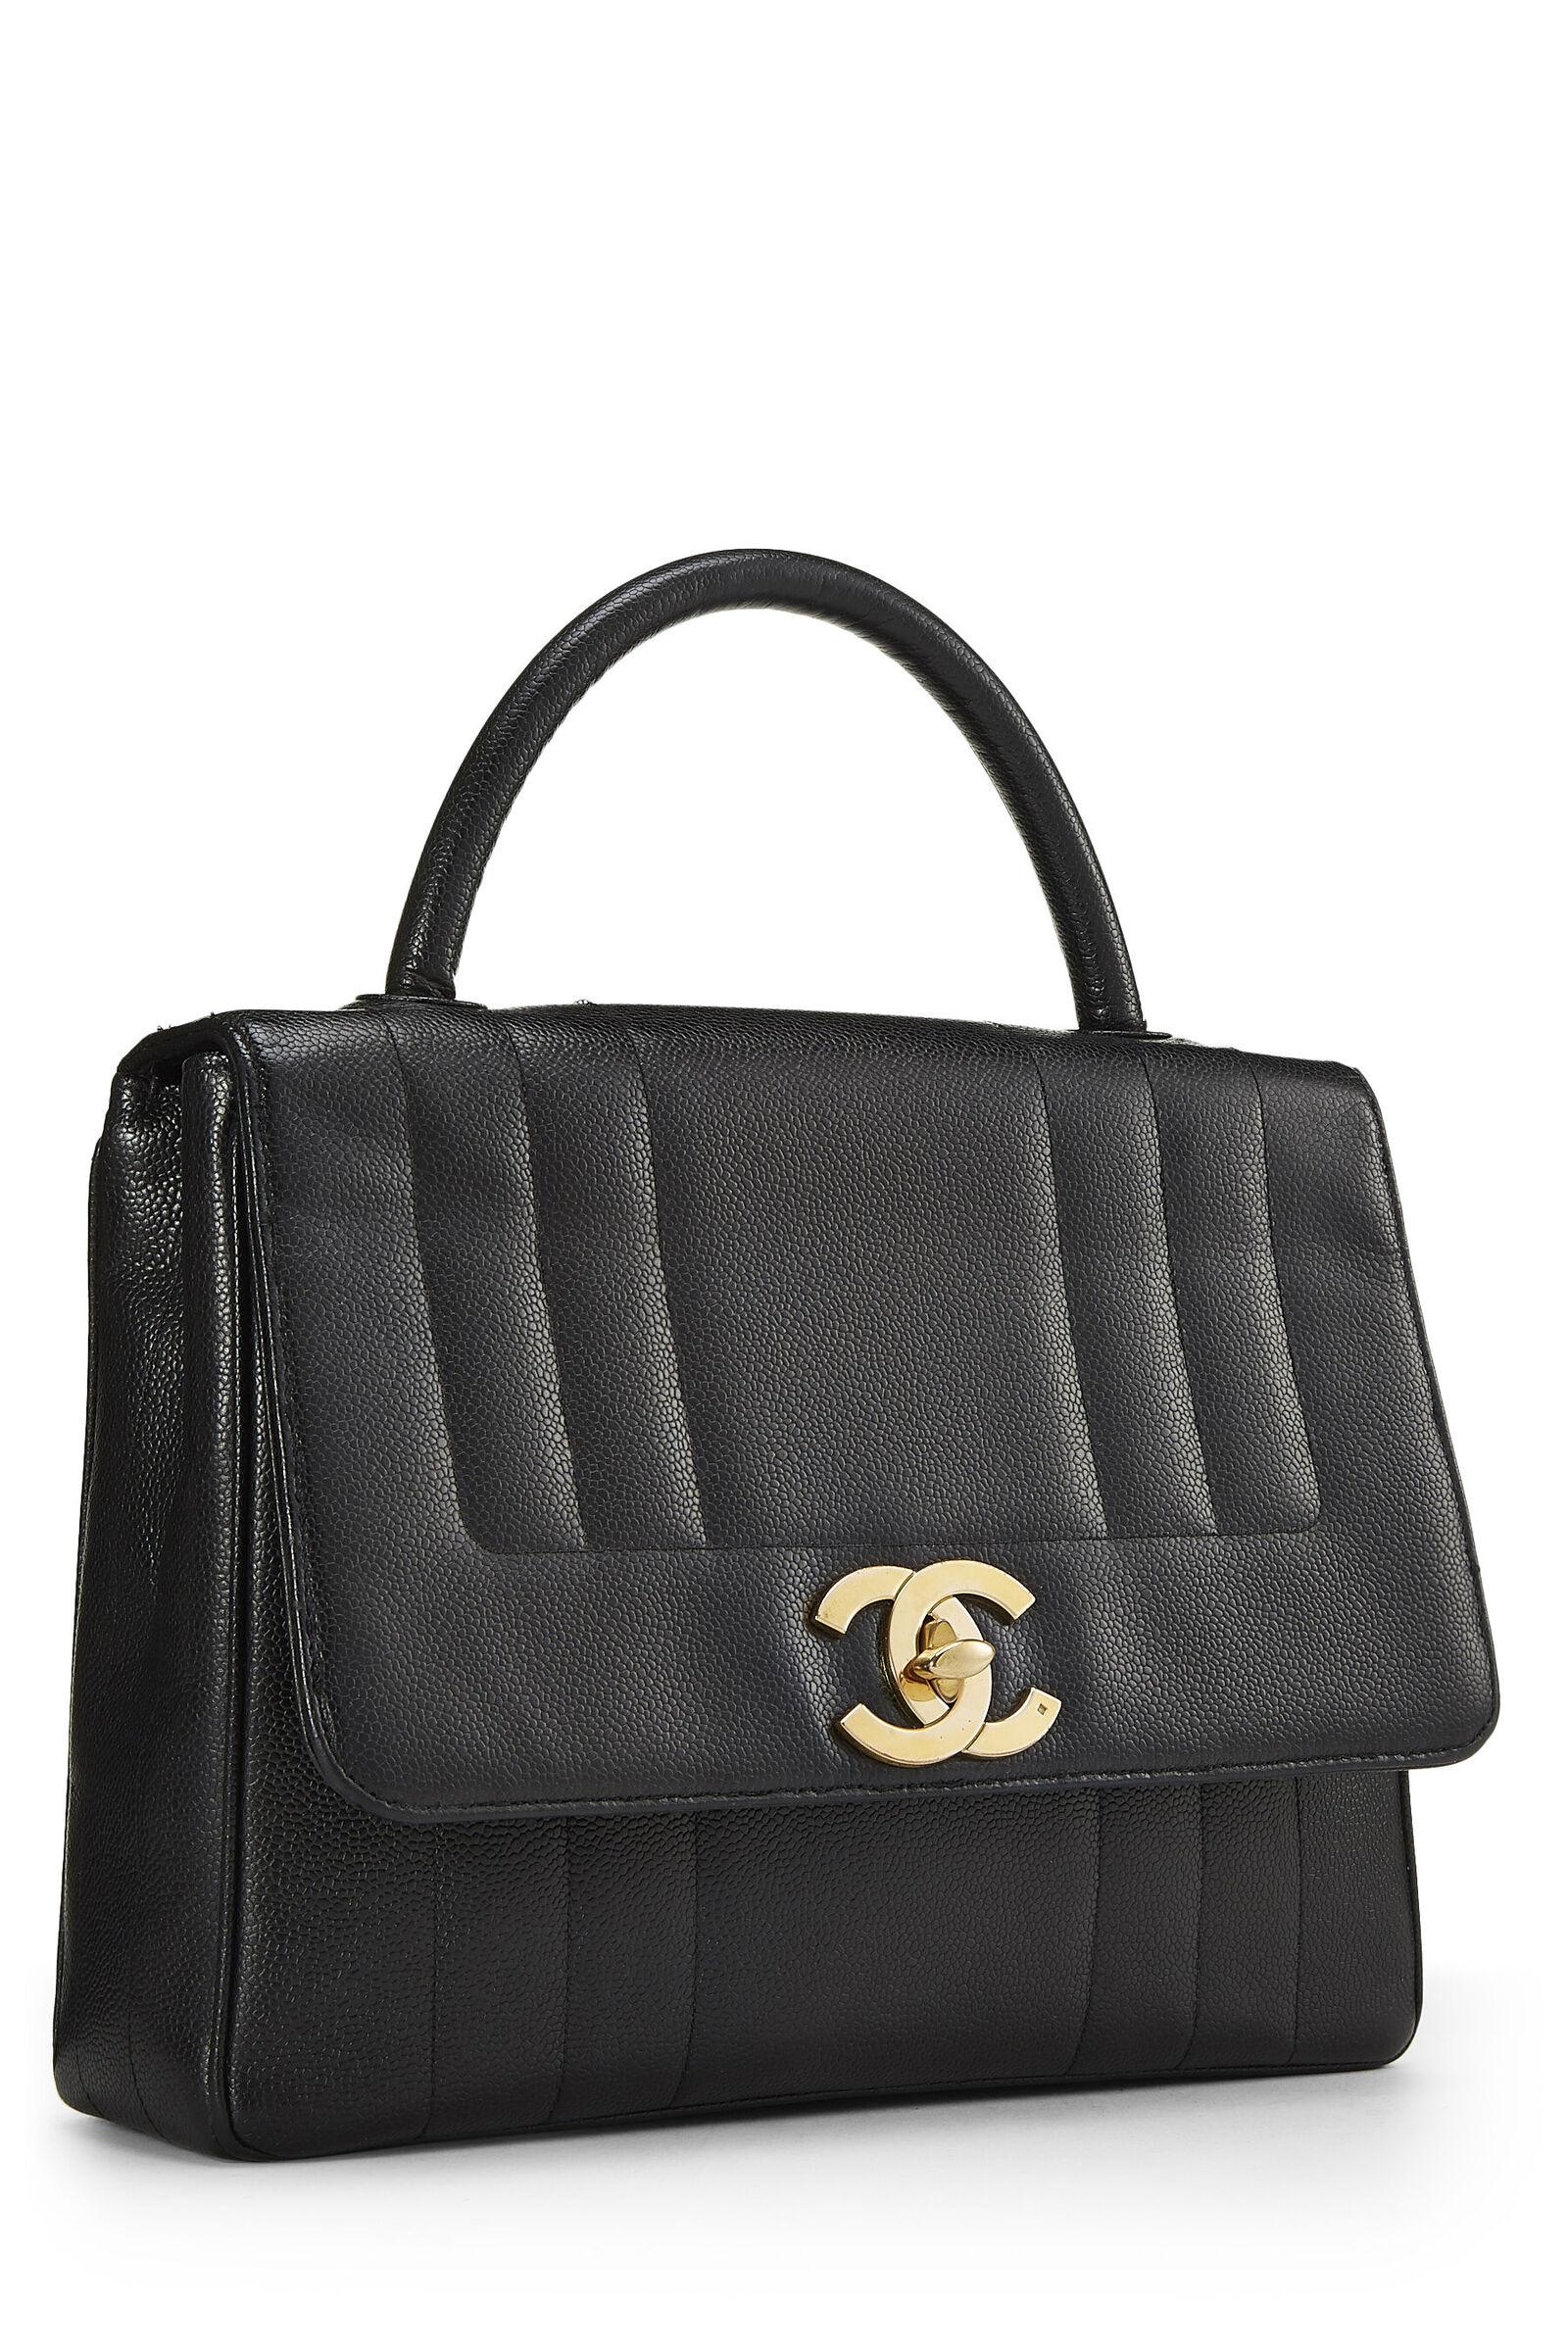 Chanel Black Caviar Vertical Kelly Bag